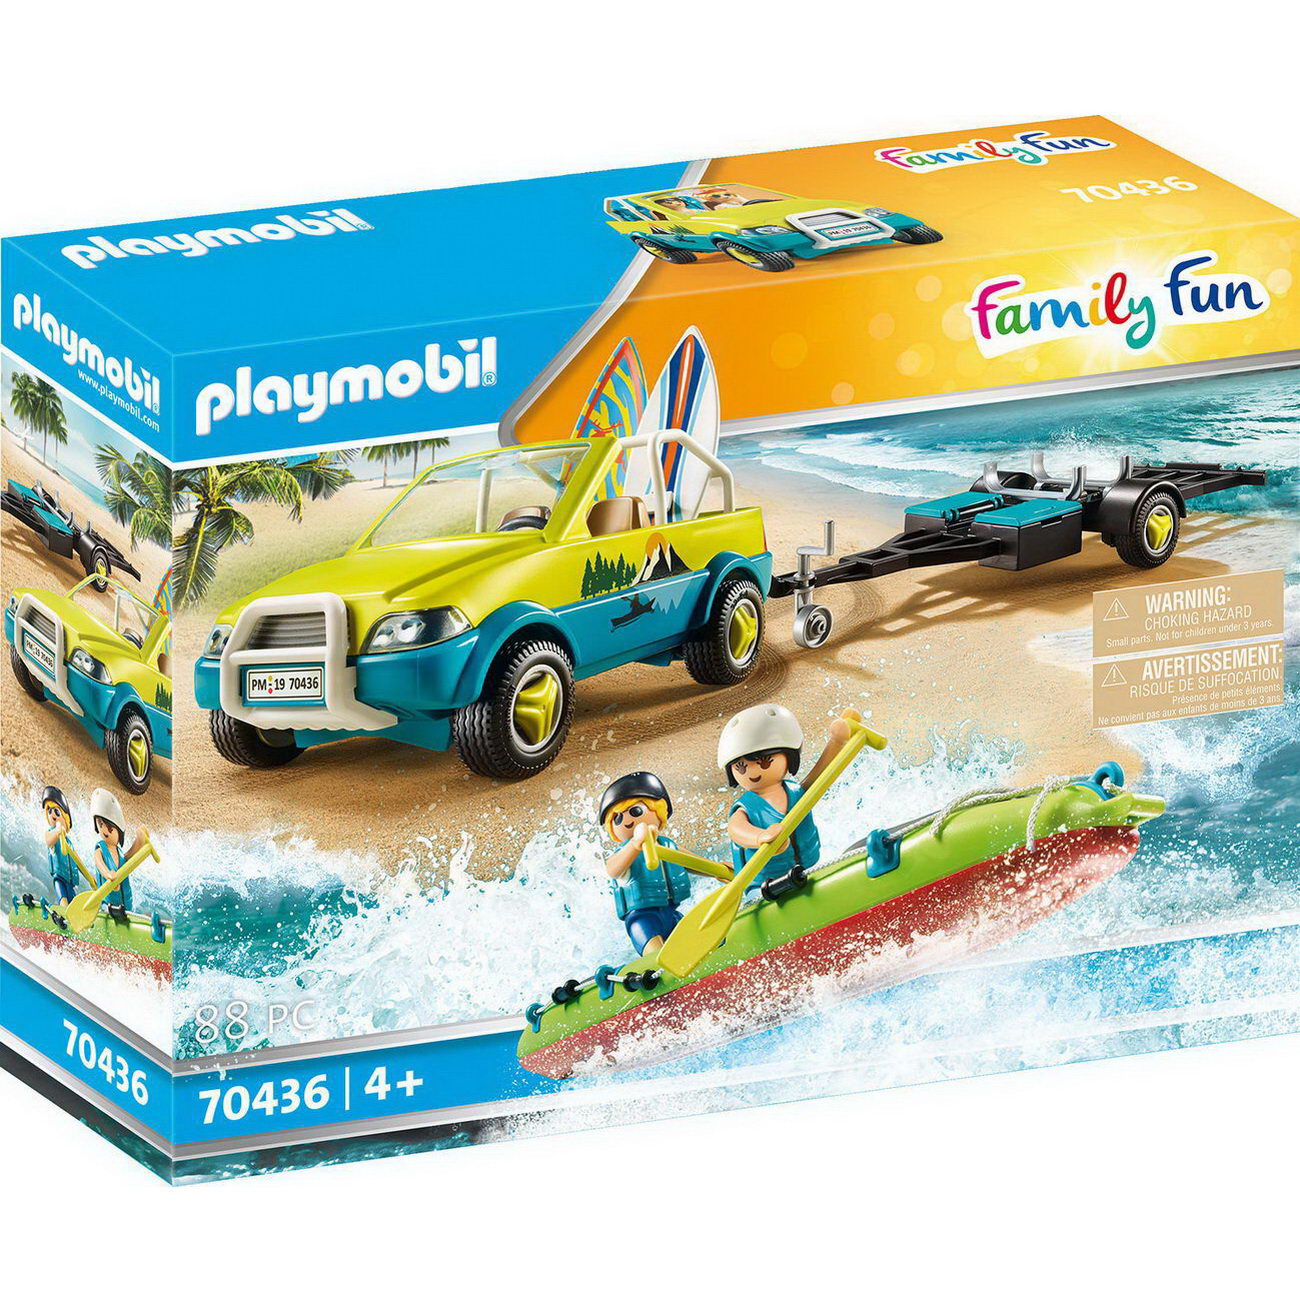 Playmobil 70436 - Strandauto mit Kanuanhänger - Family Fun